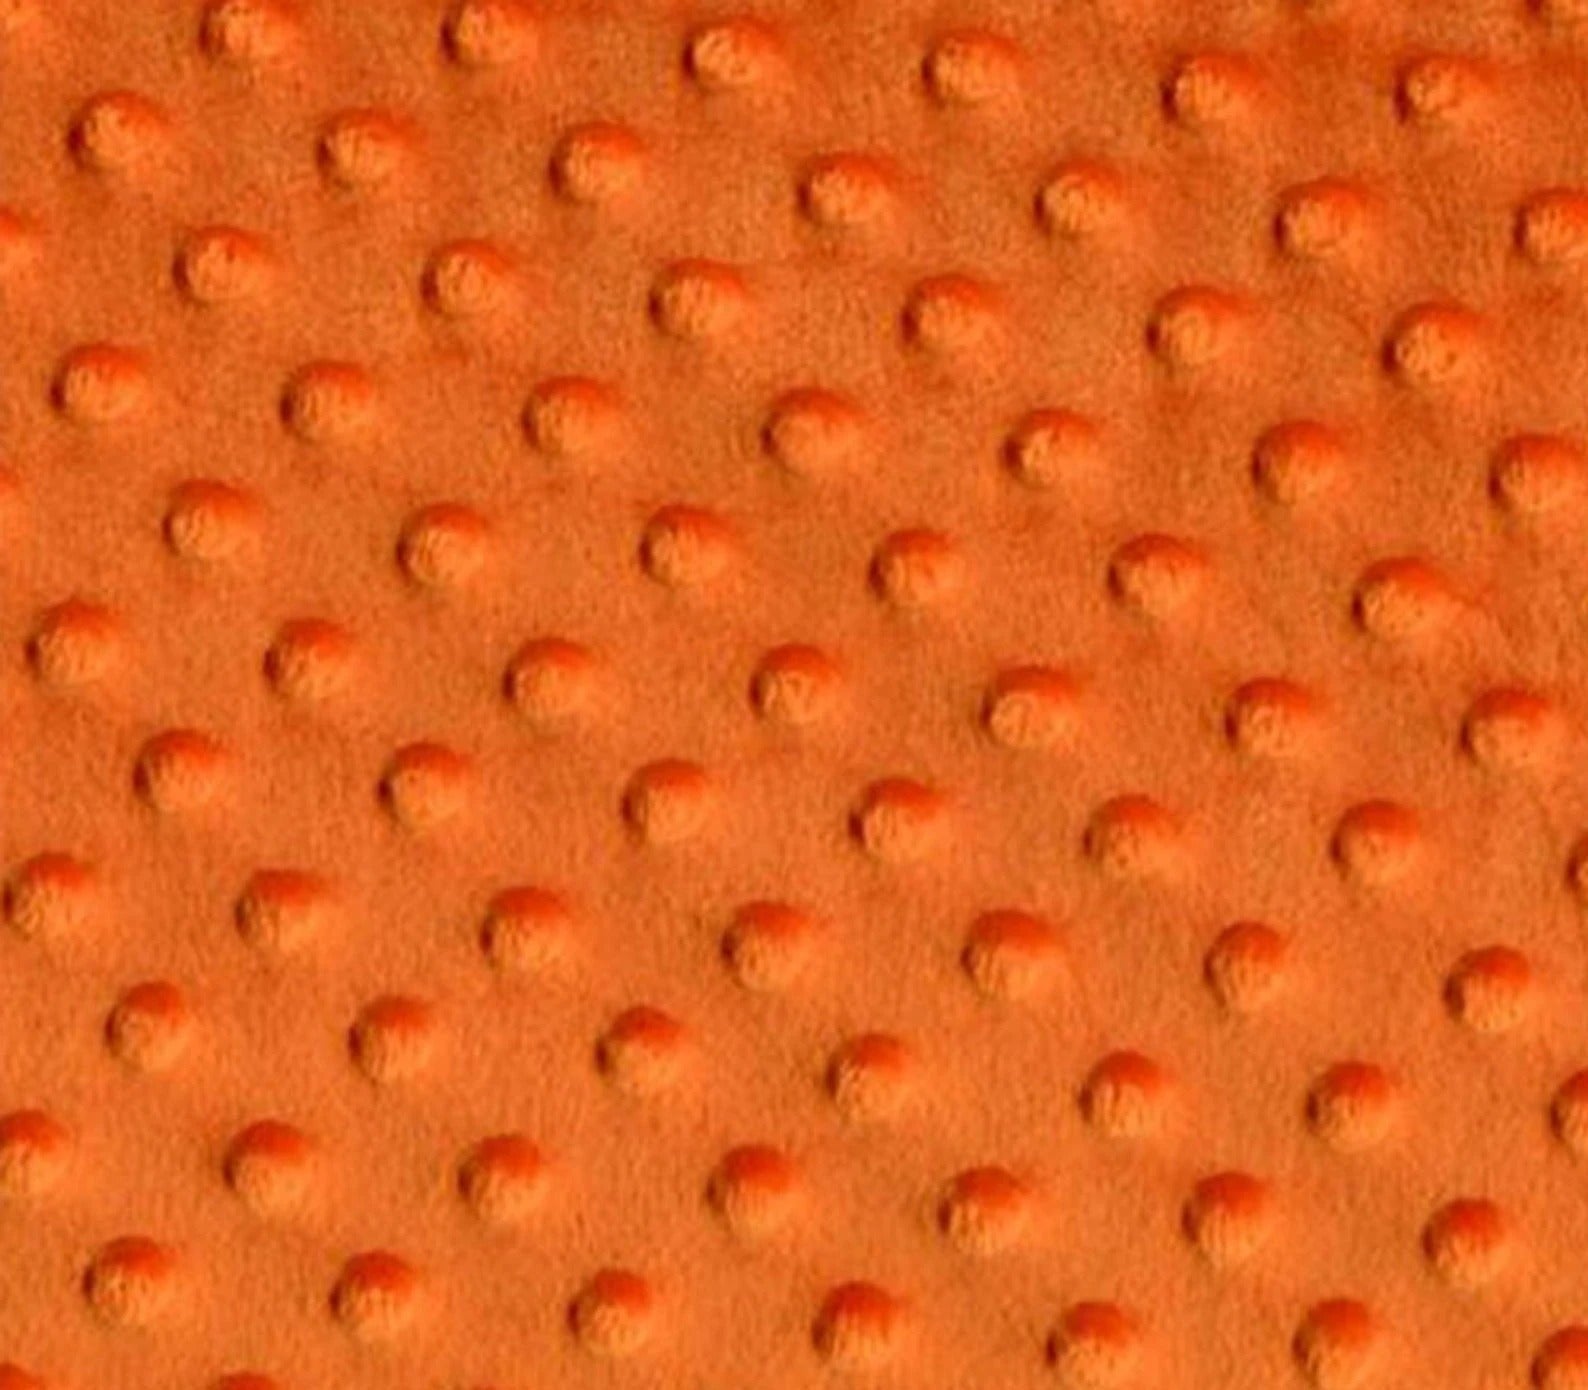 Dimple Dot Minky Fabric Sold By The Yard - 36"/ 58"MinkyICEFABRICICE FABRICSOrangeBy The Yard (60 inches Wide)Dimple Dot Minky Fabric Sold By The Yard - 36"/ 58" ICEFABRIC Orange